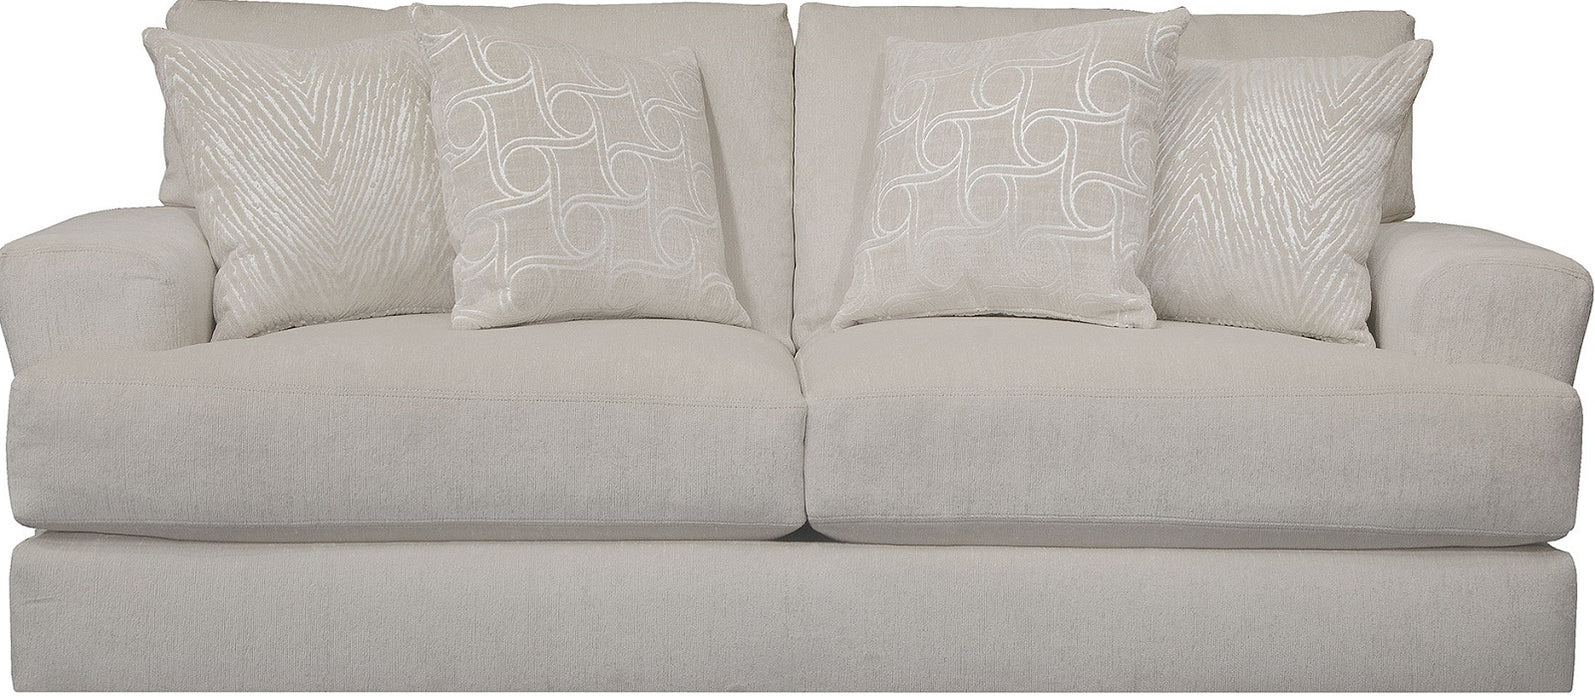 Jackson Furniture Lamar 90"Sofa in Cream 4098-03/1724/6/2267/6 image